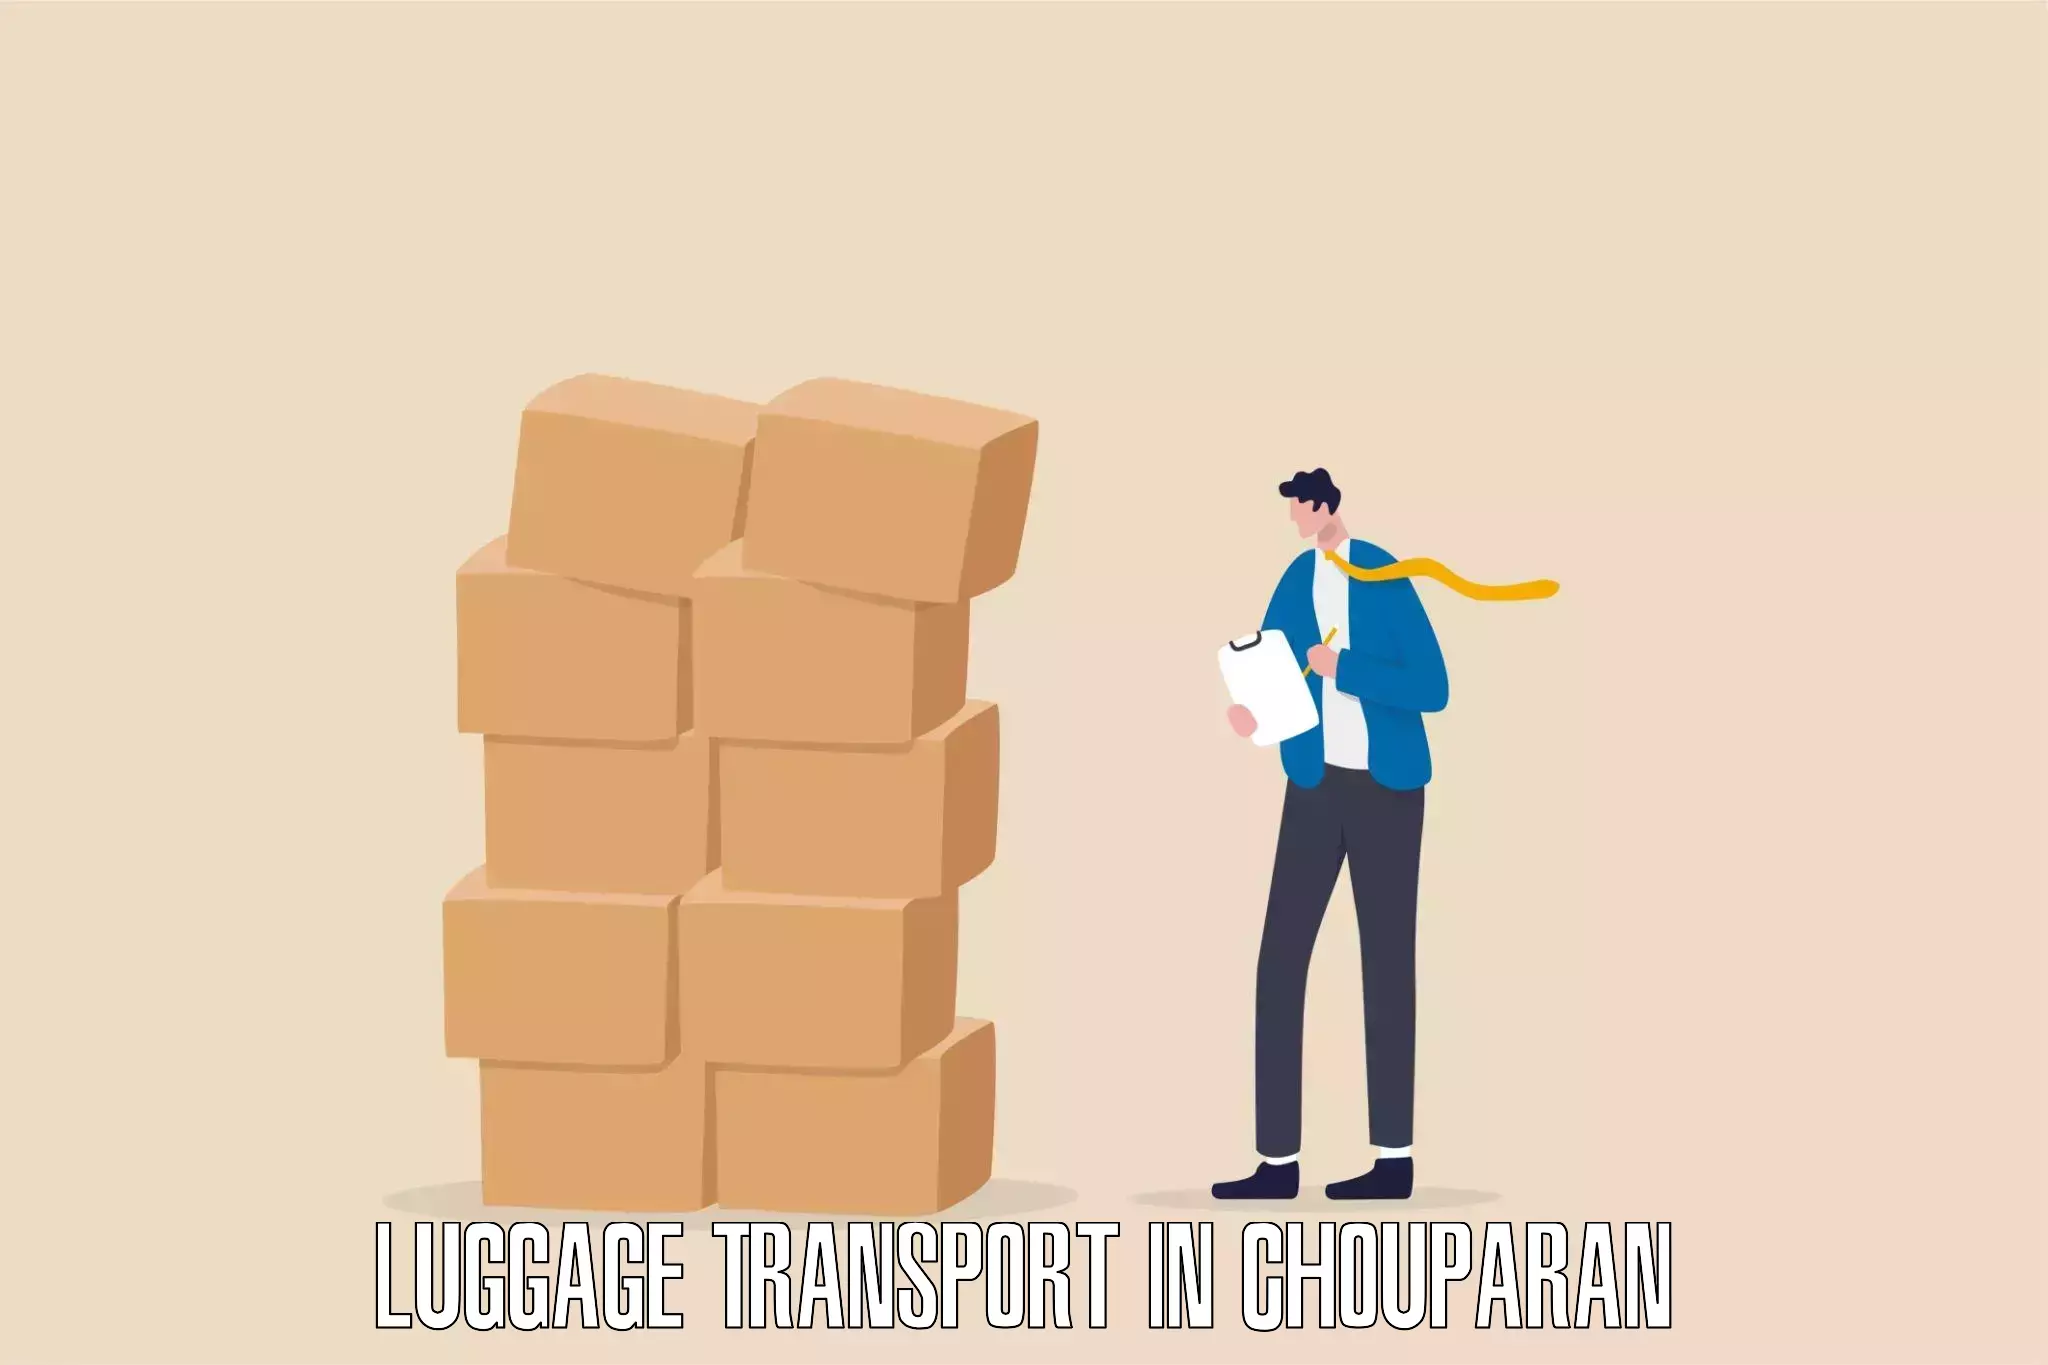 Bulk luggage shipping in Chouparan